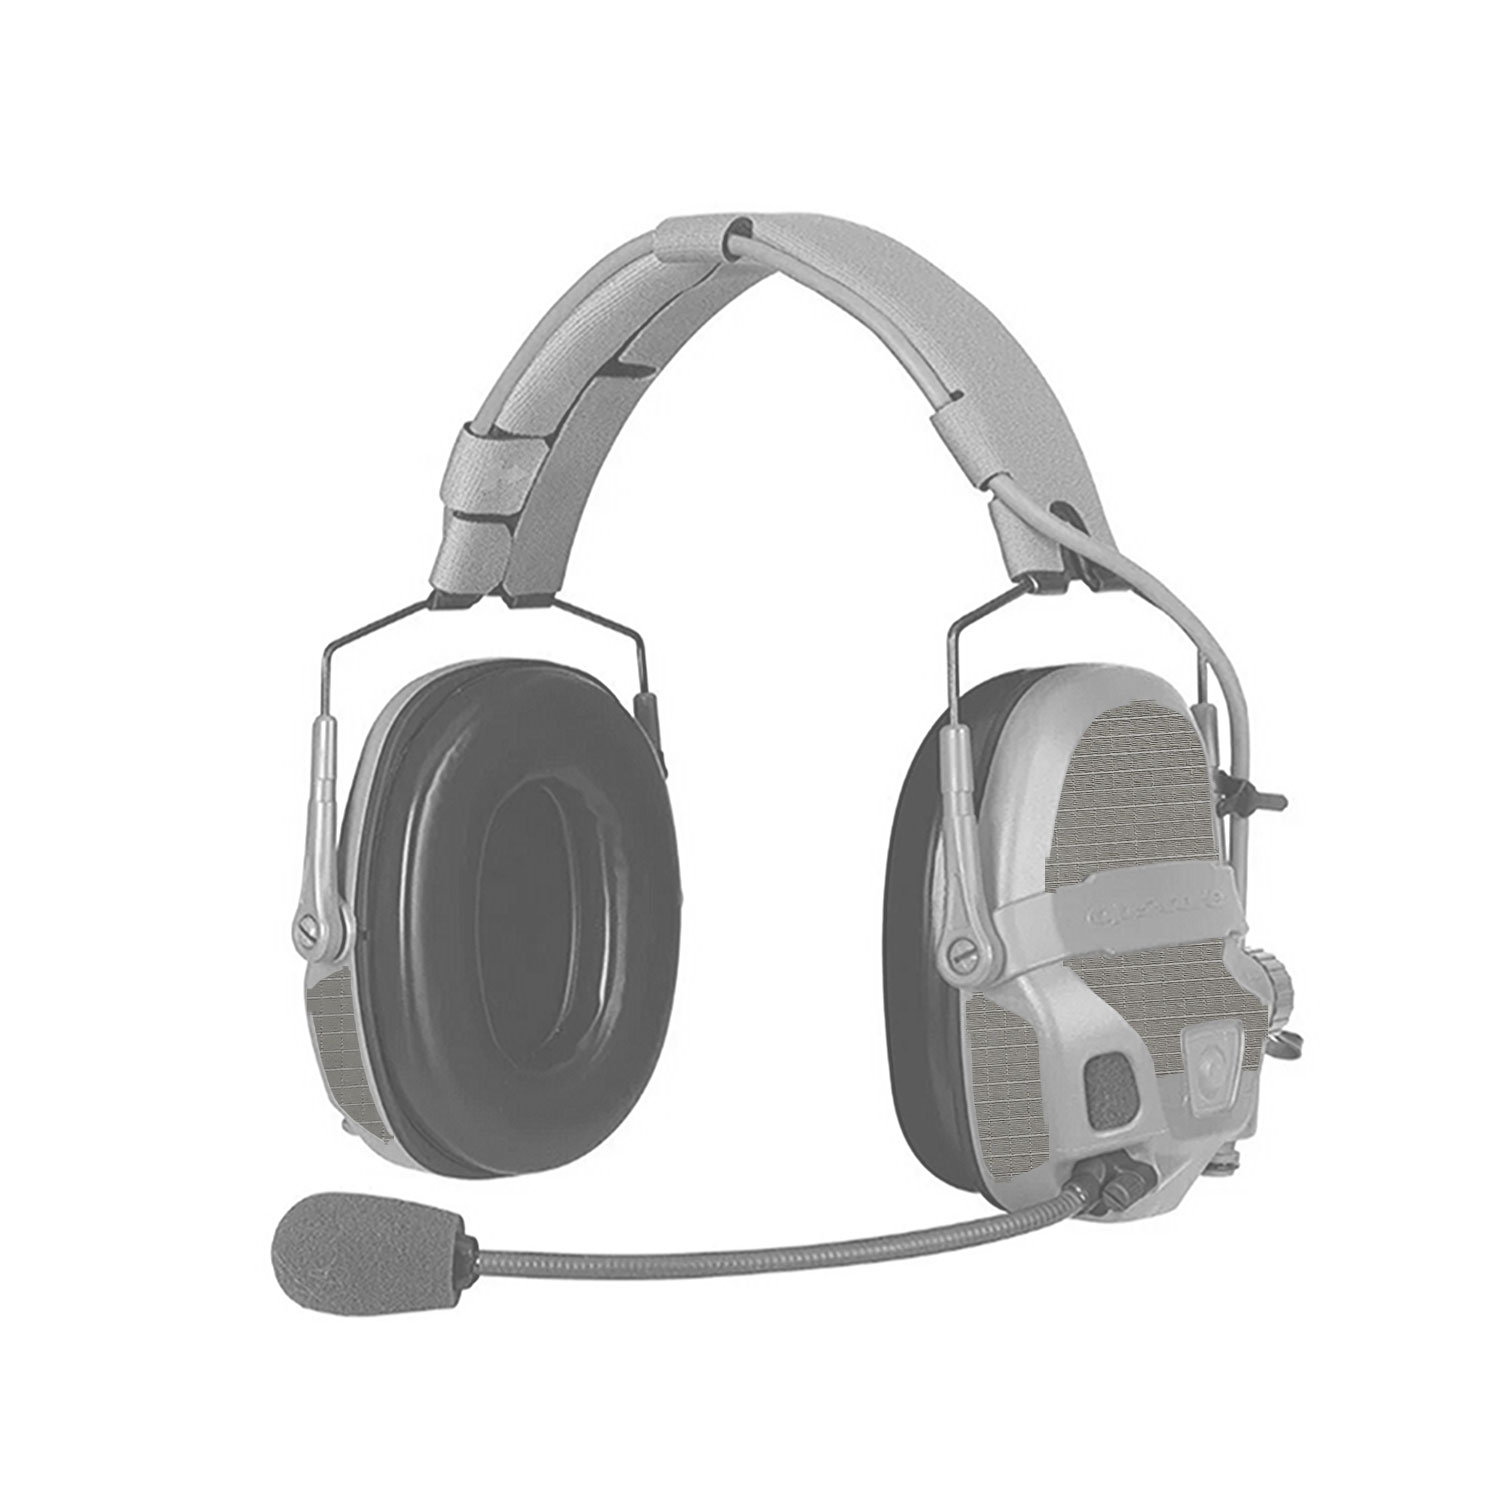 amp-headset-wolf-grey-2